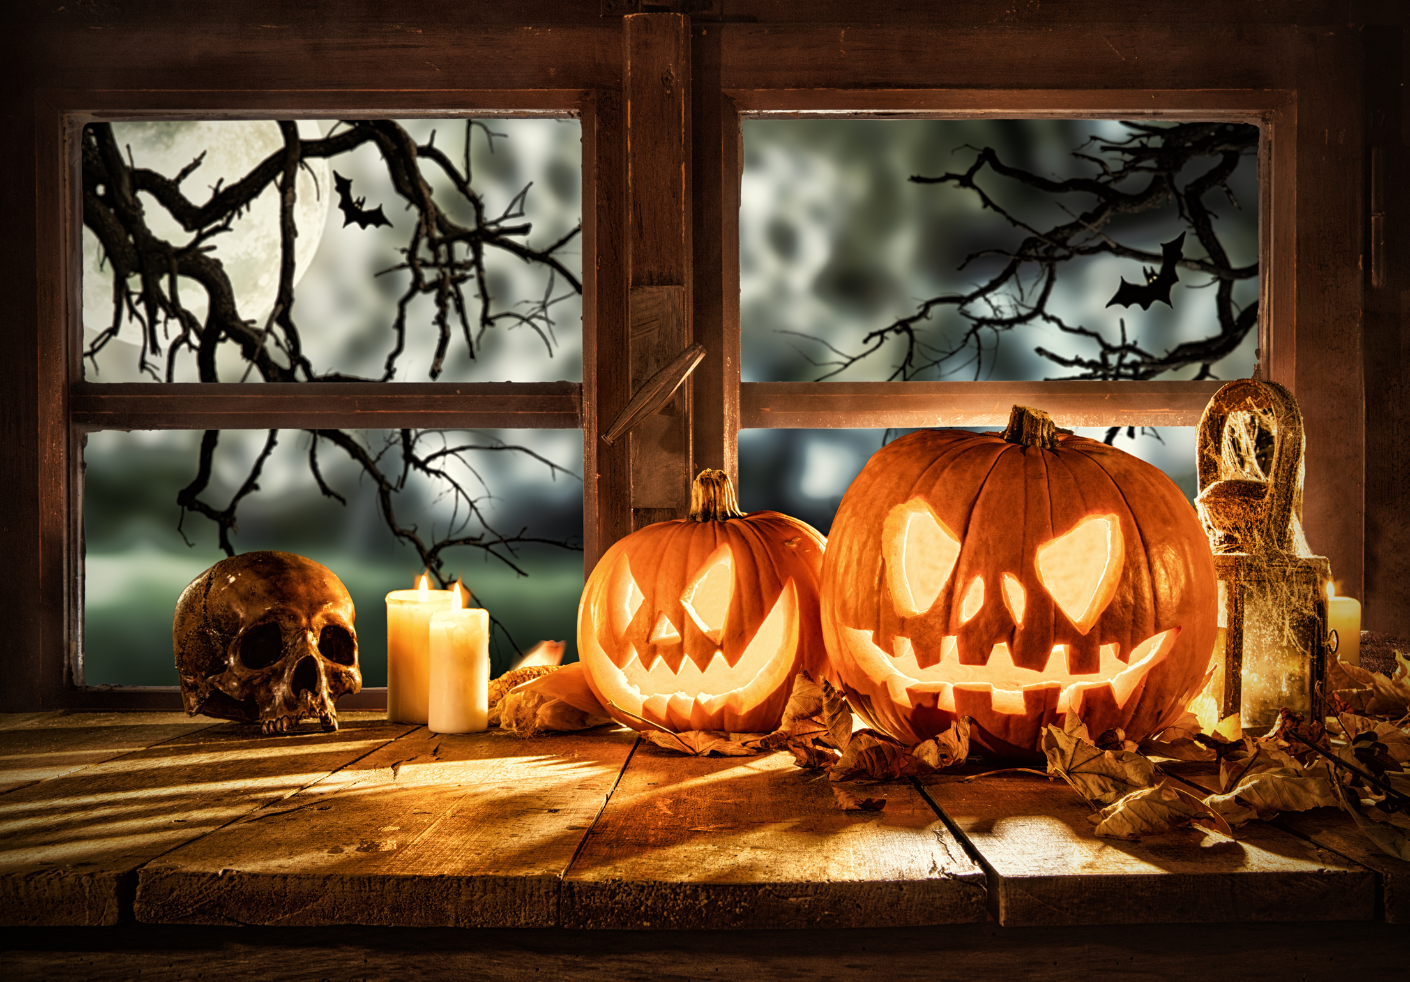 pumpkins as decorations